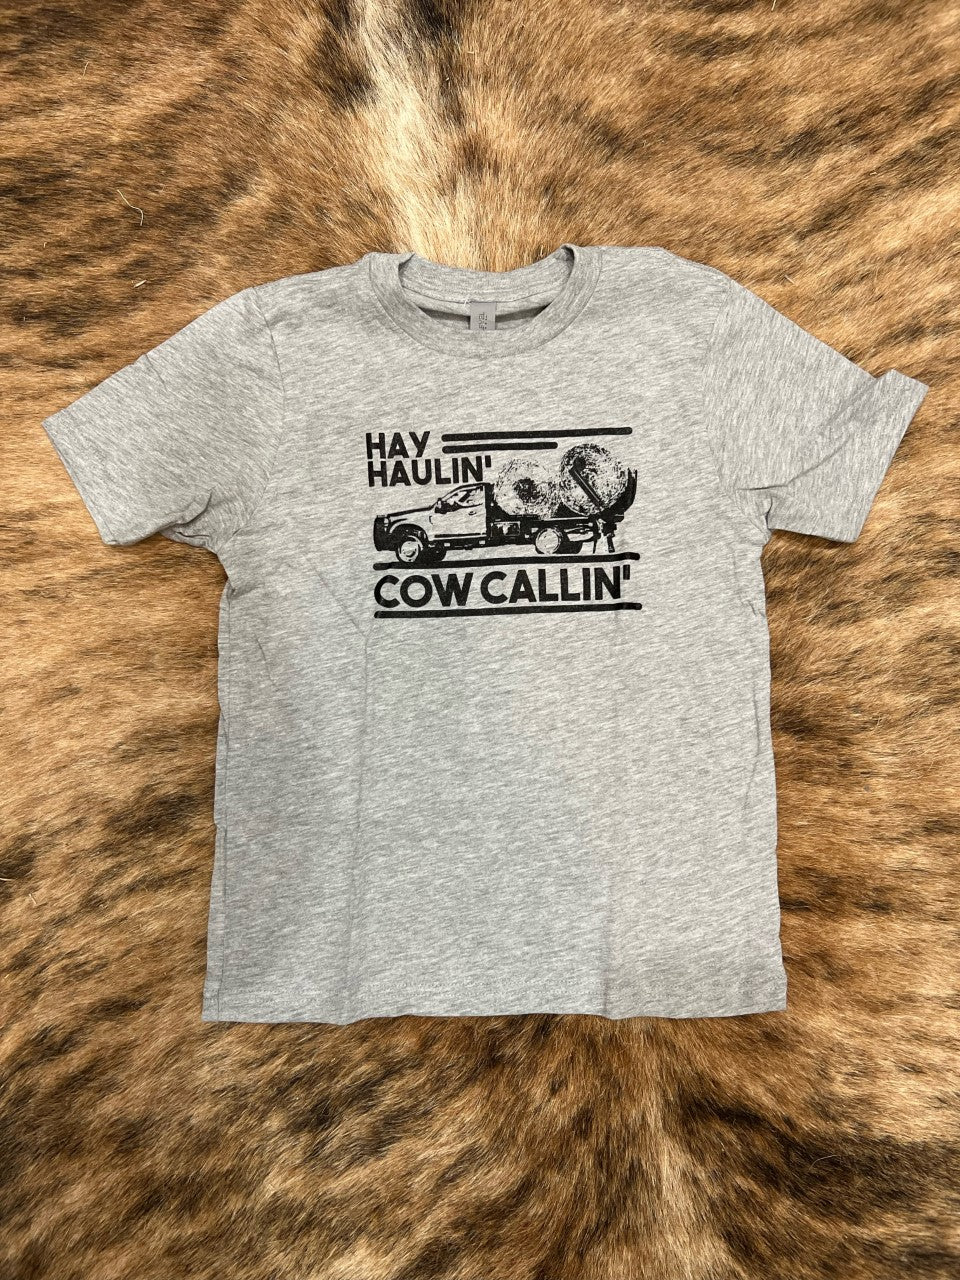 Hay Haulin' Cow Callin'